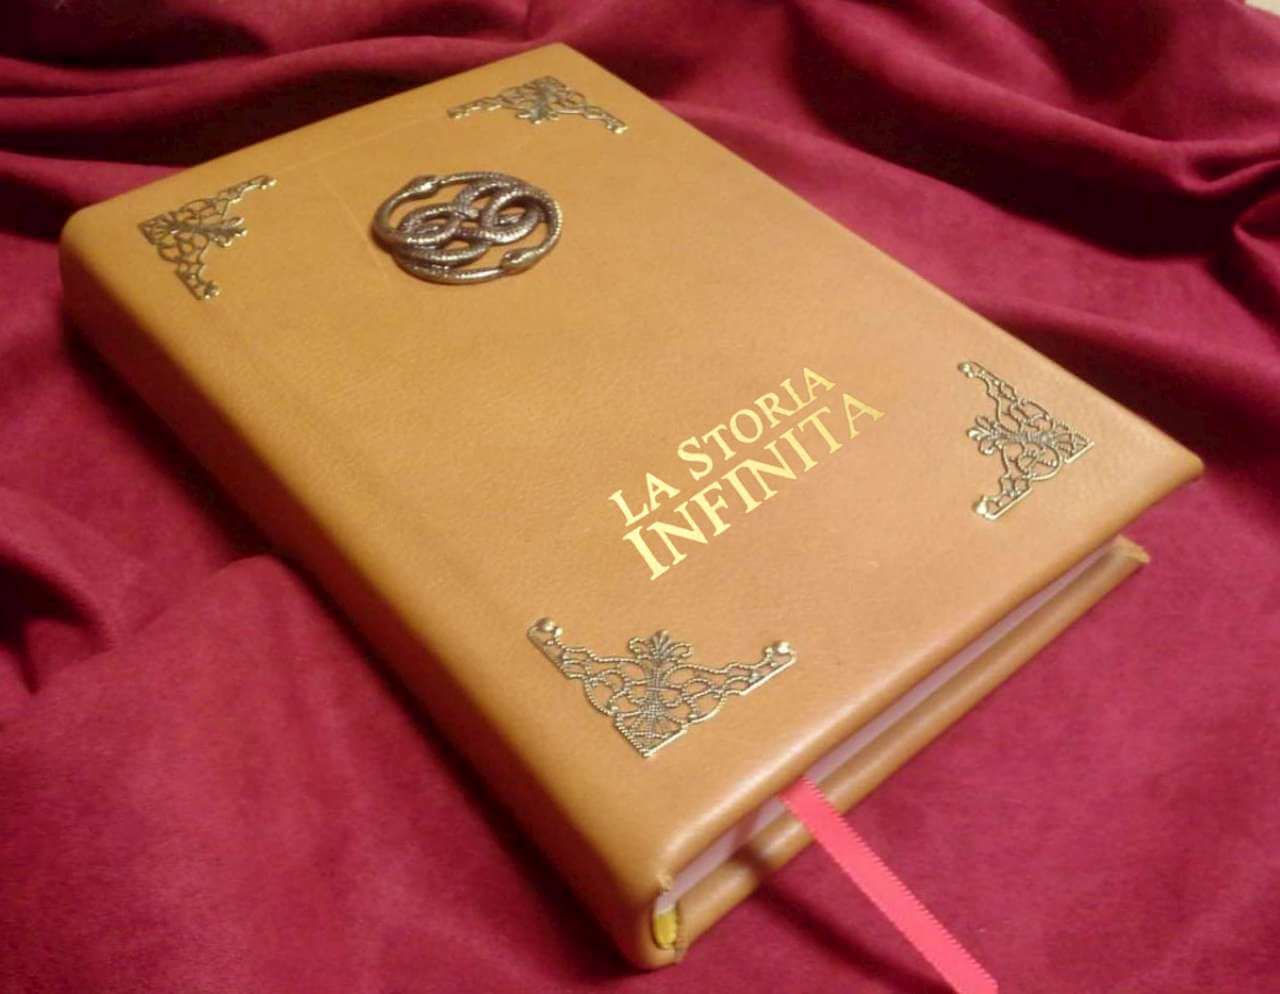 La Storia Infinita Libro Rilegato in Pelle - Neverending Story Leatherbound Book